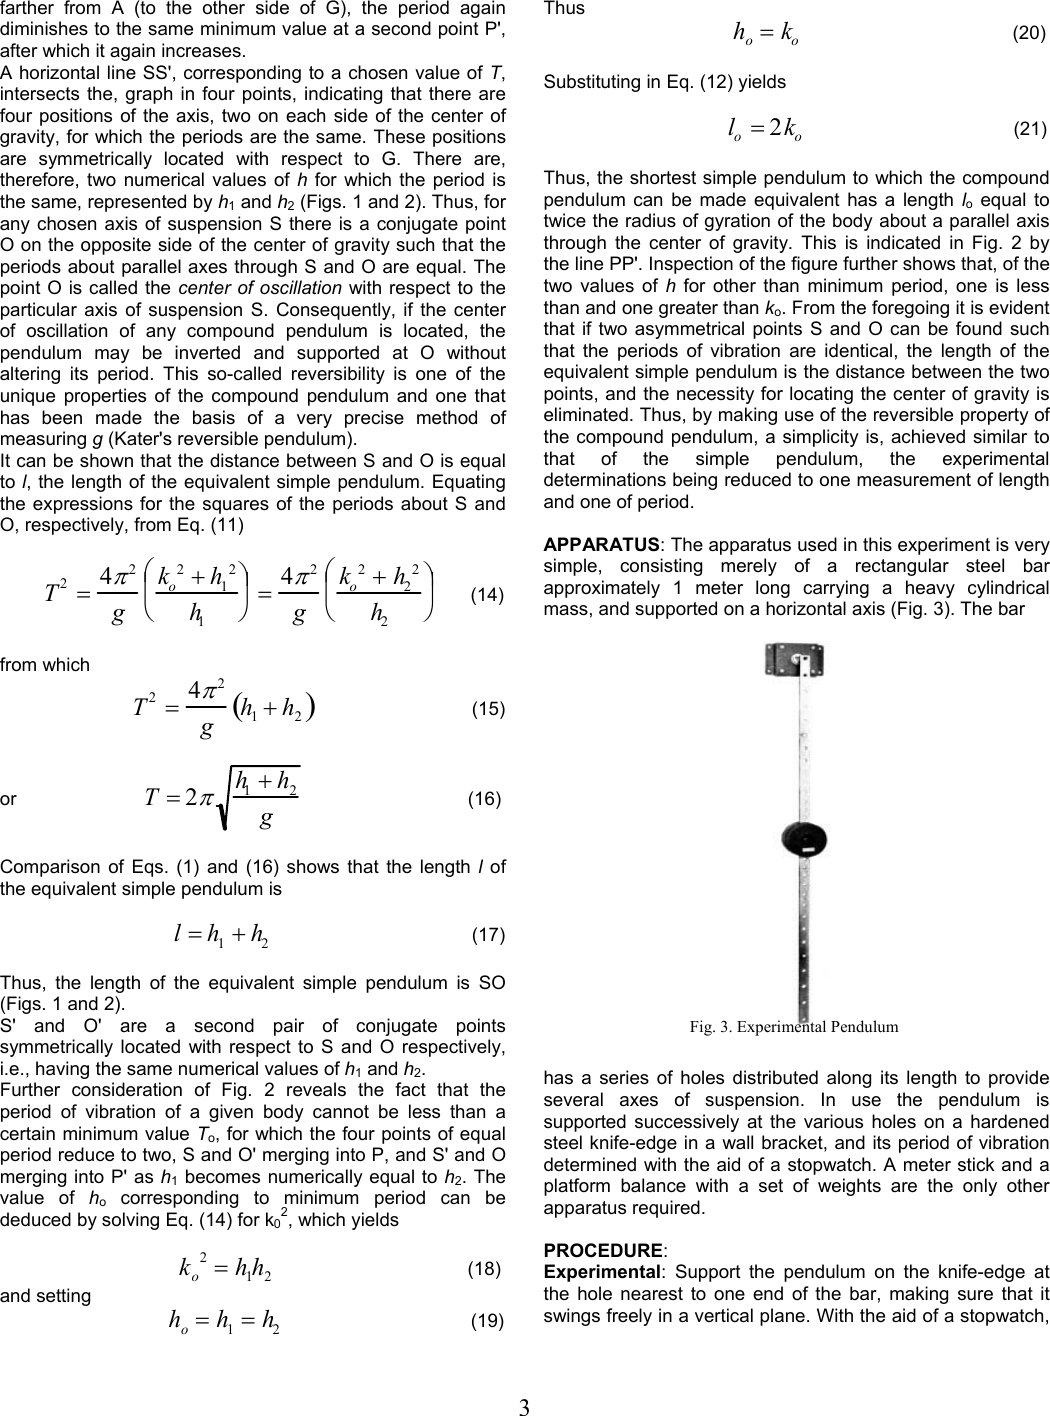 Page 3 of 4 - B 01 CENCO Compound Pendulum Manual